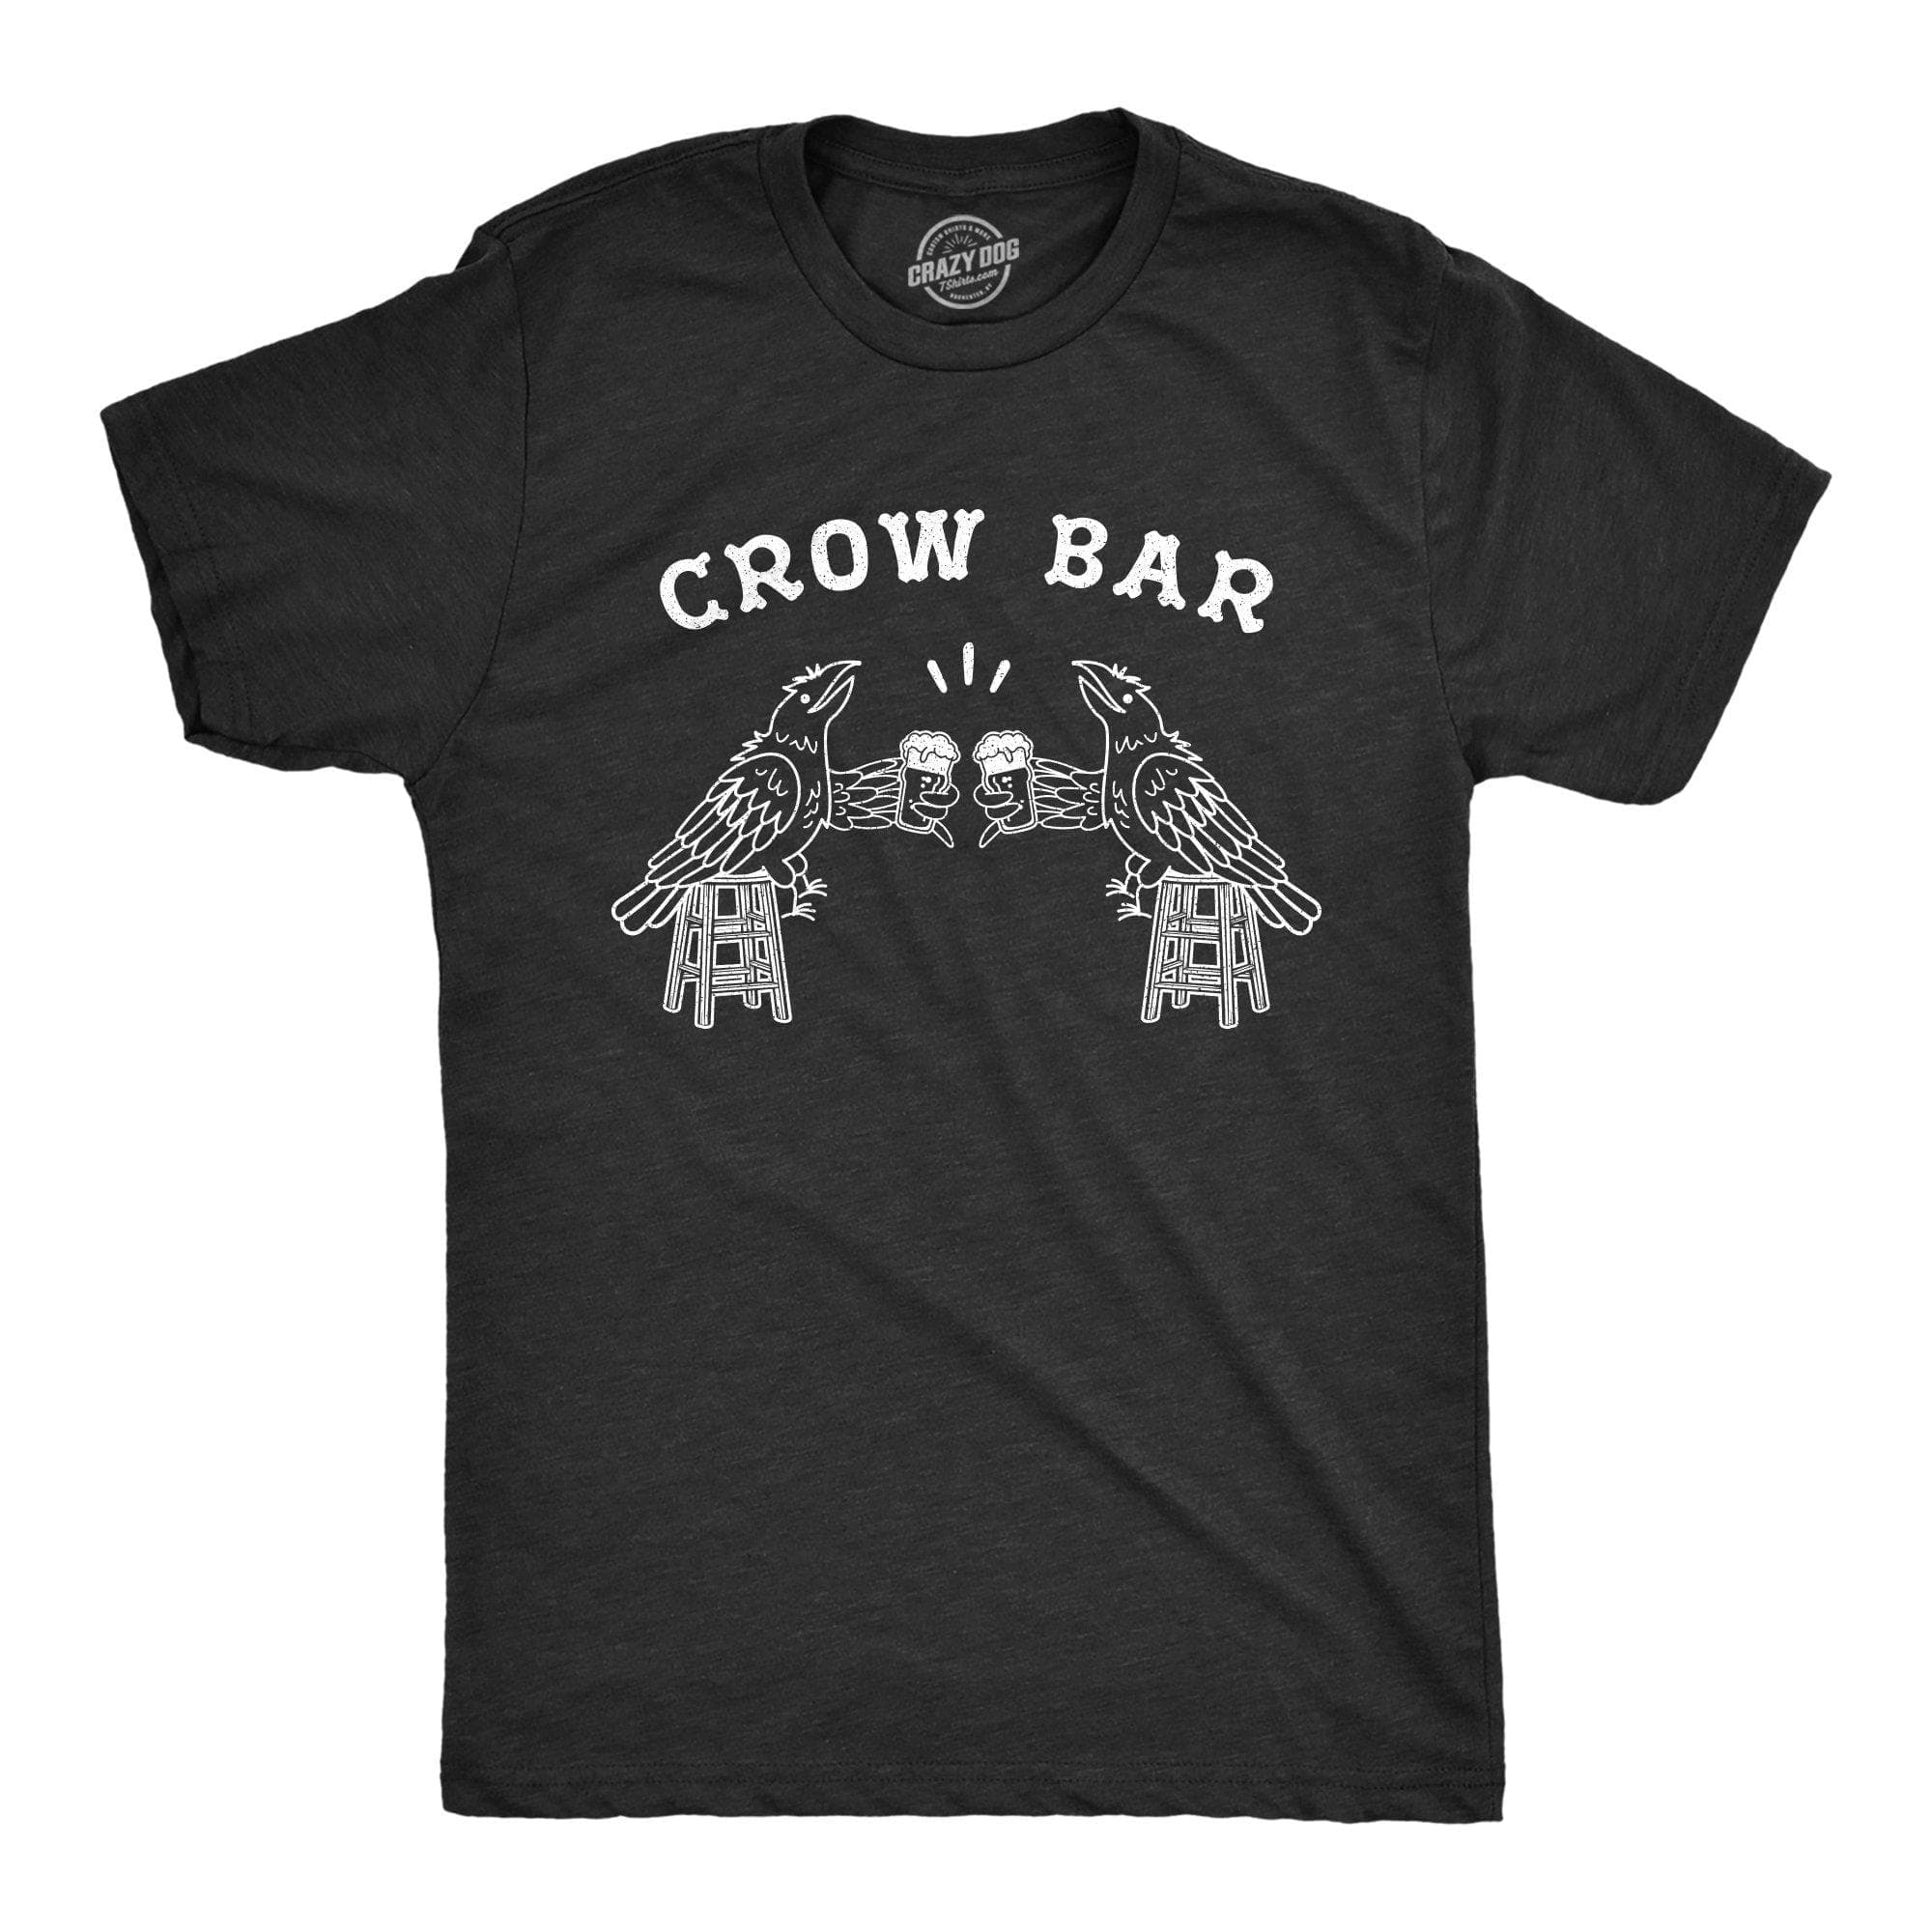 Crow Bar Men's Tshirt - Crazy Dog T-Shirts